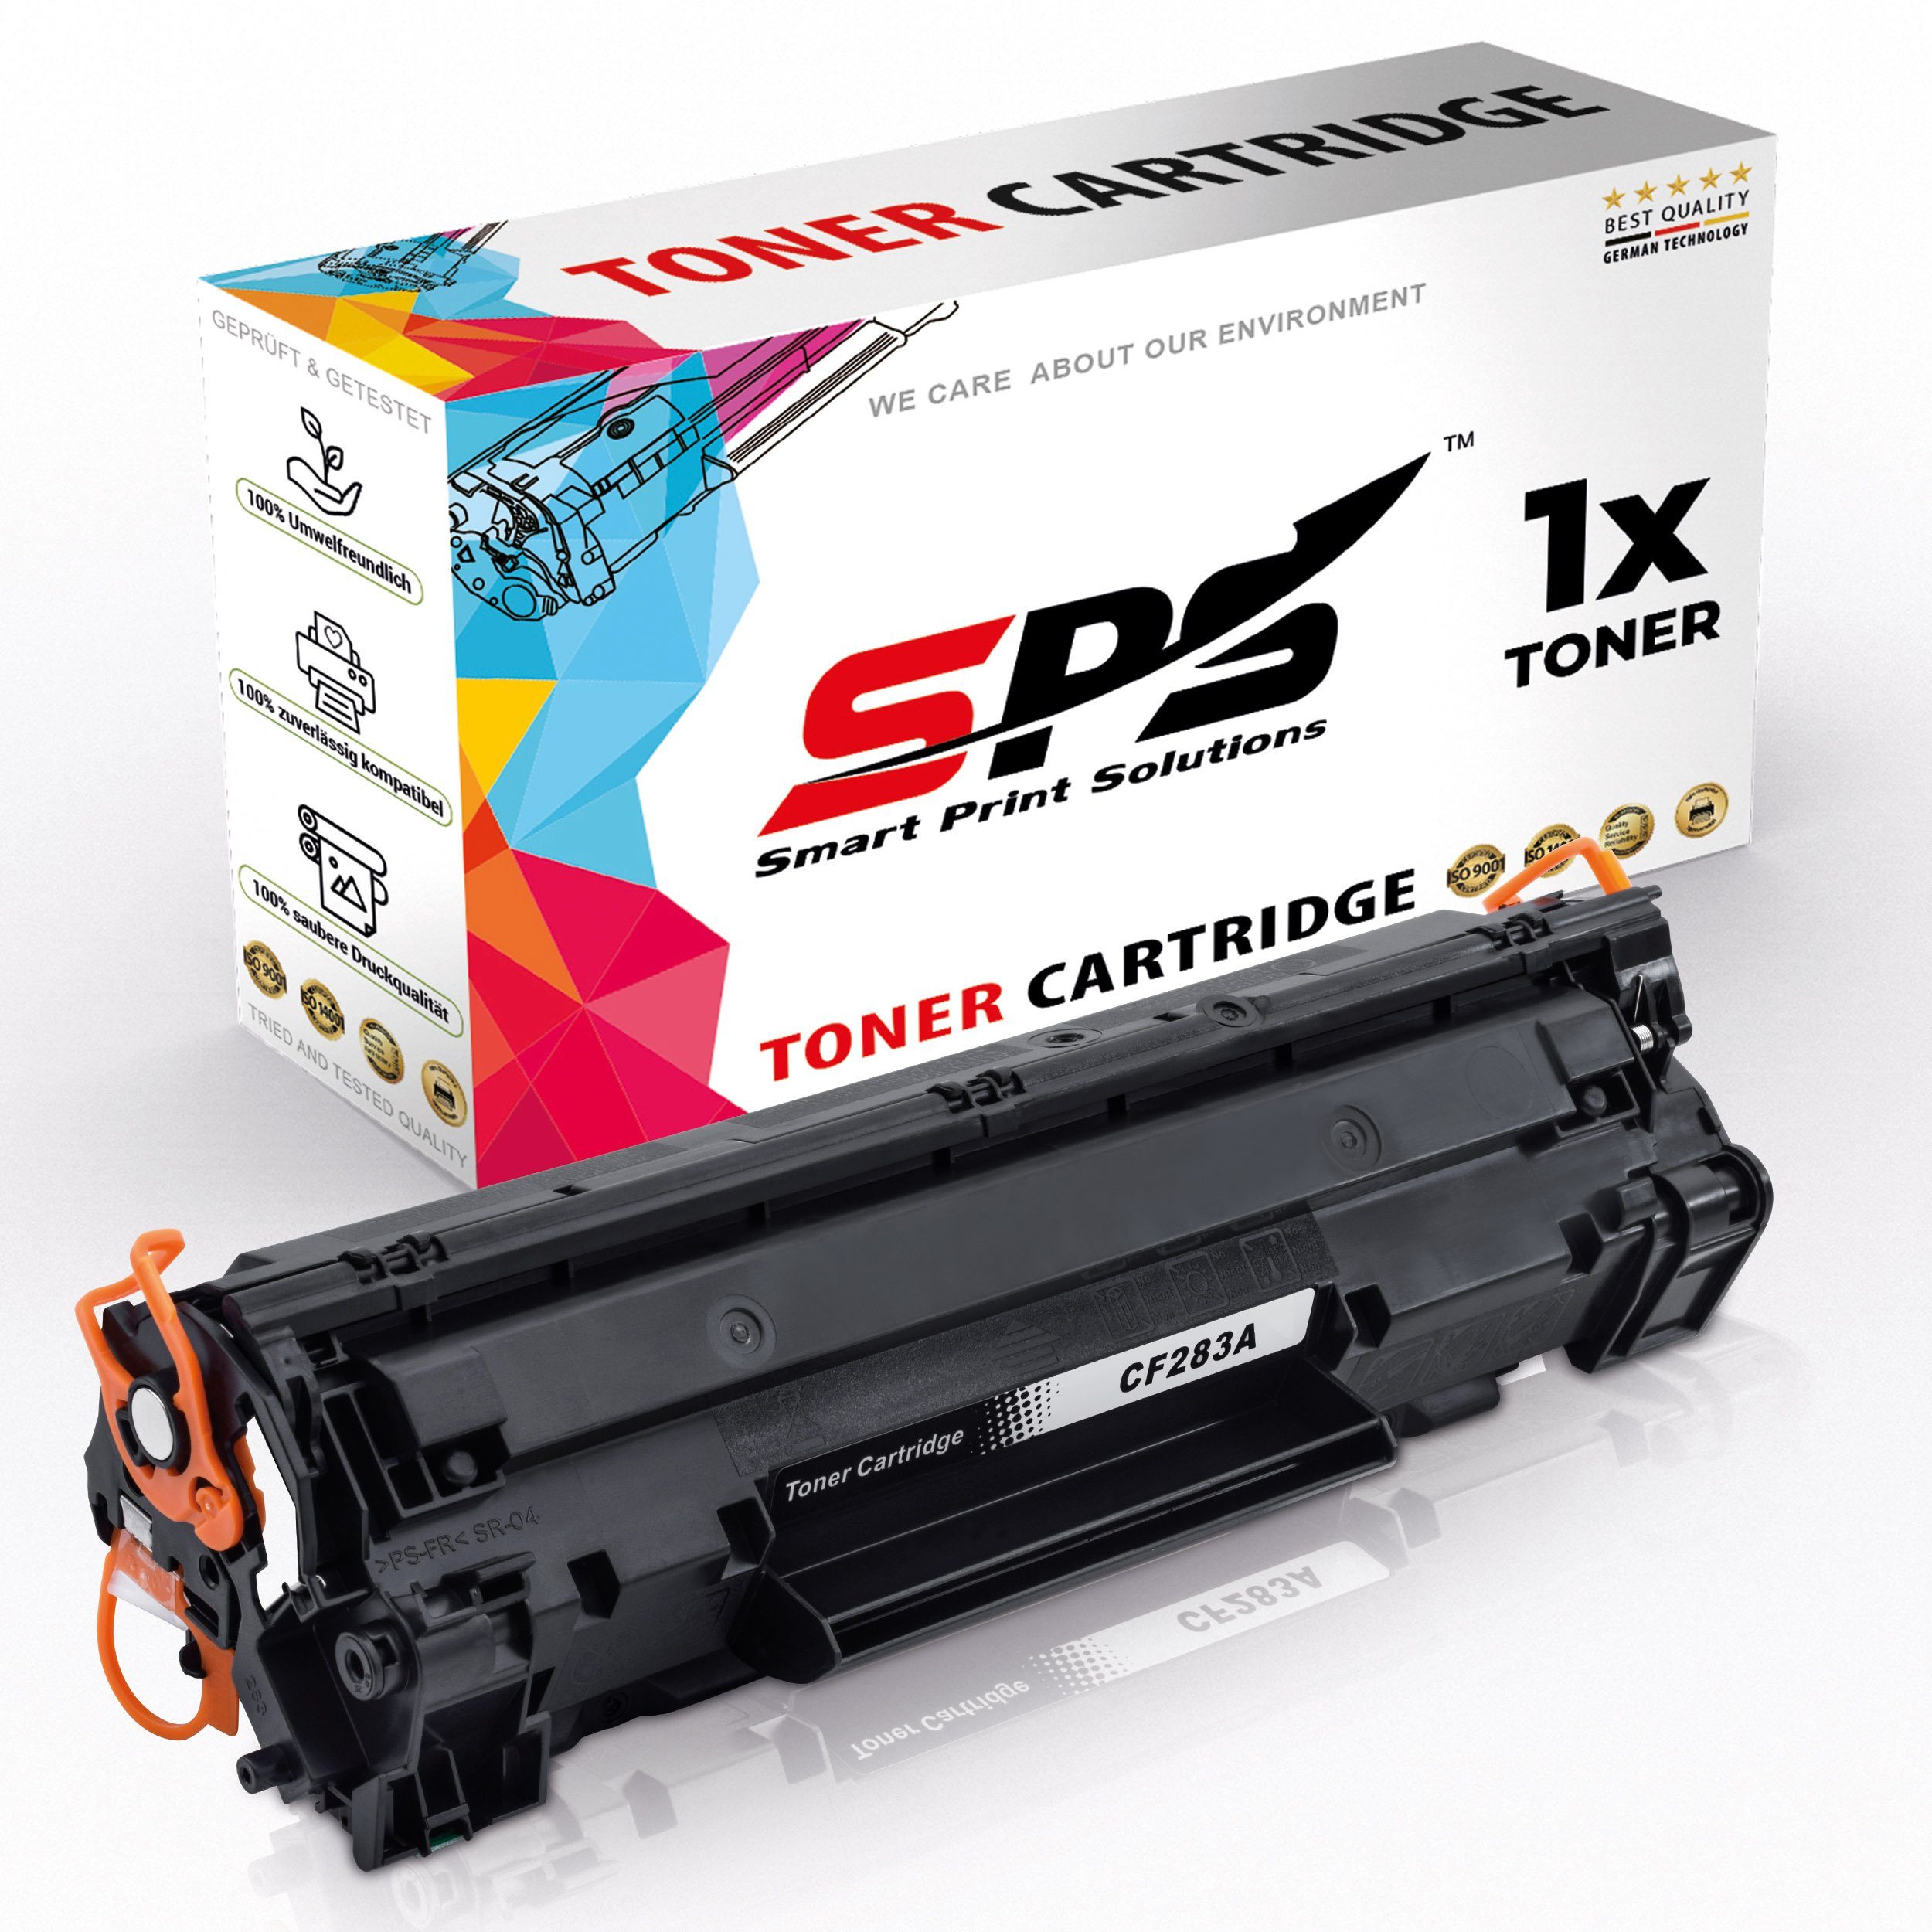 SPS MFP (CF283A/8, M 226 Tonerkartusche 1x Toner) Pack, Laserjet für Pro Kompatibel (1er HP